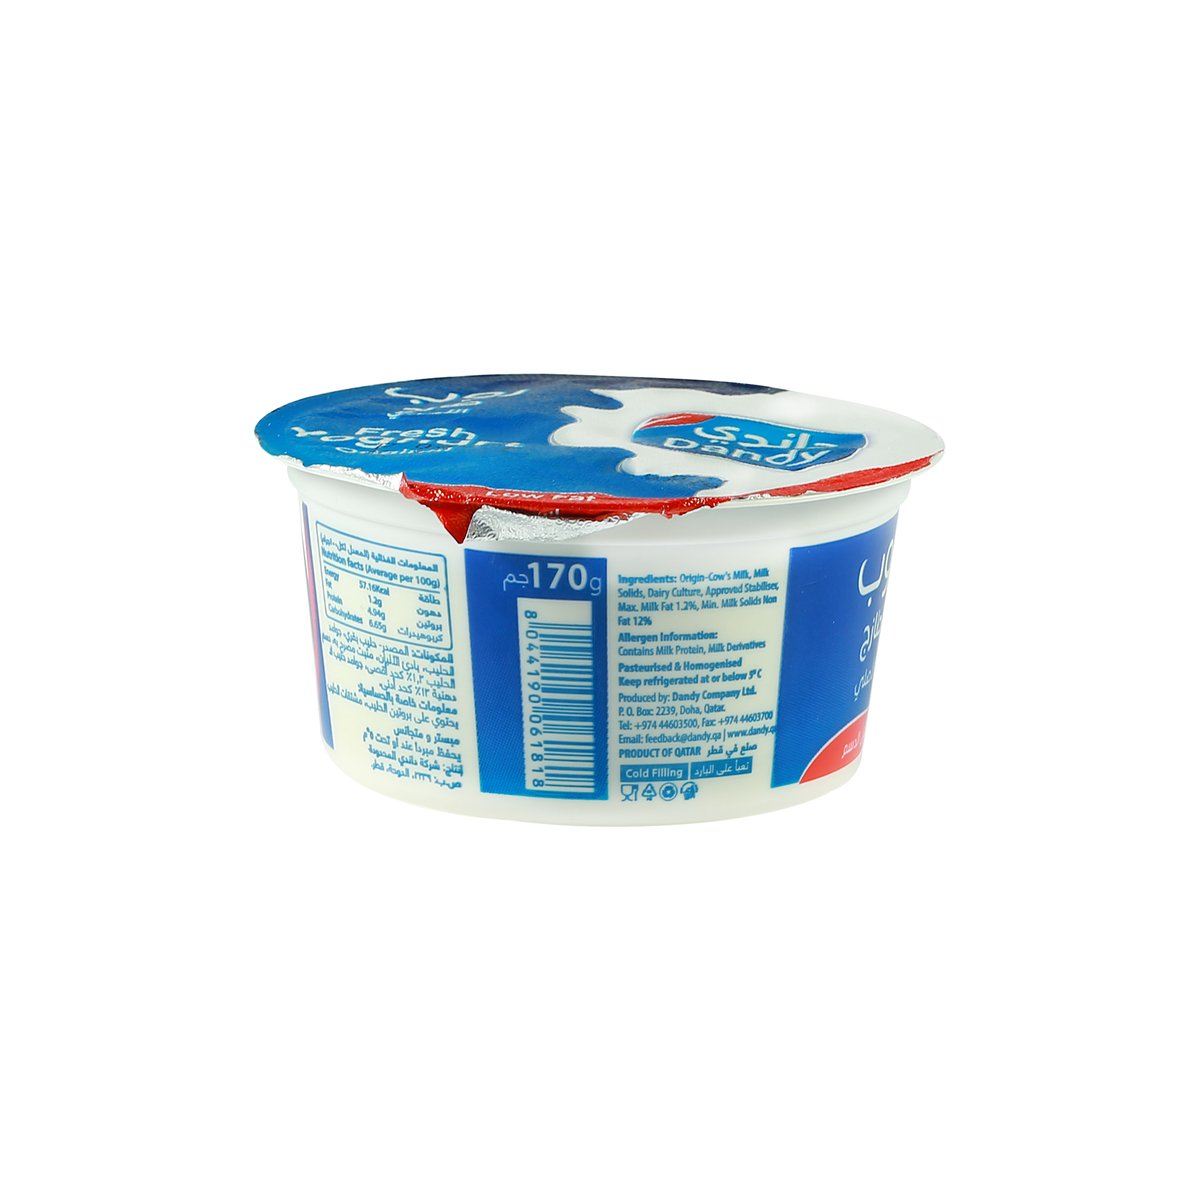 Dandy Fresh Yoghurt Original Low Fat 170 ml